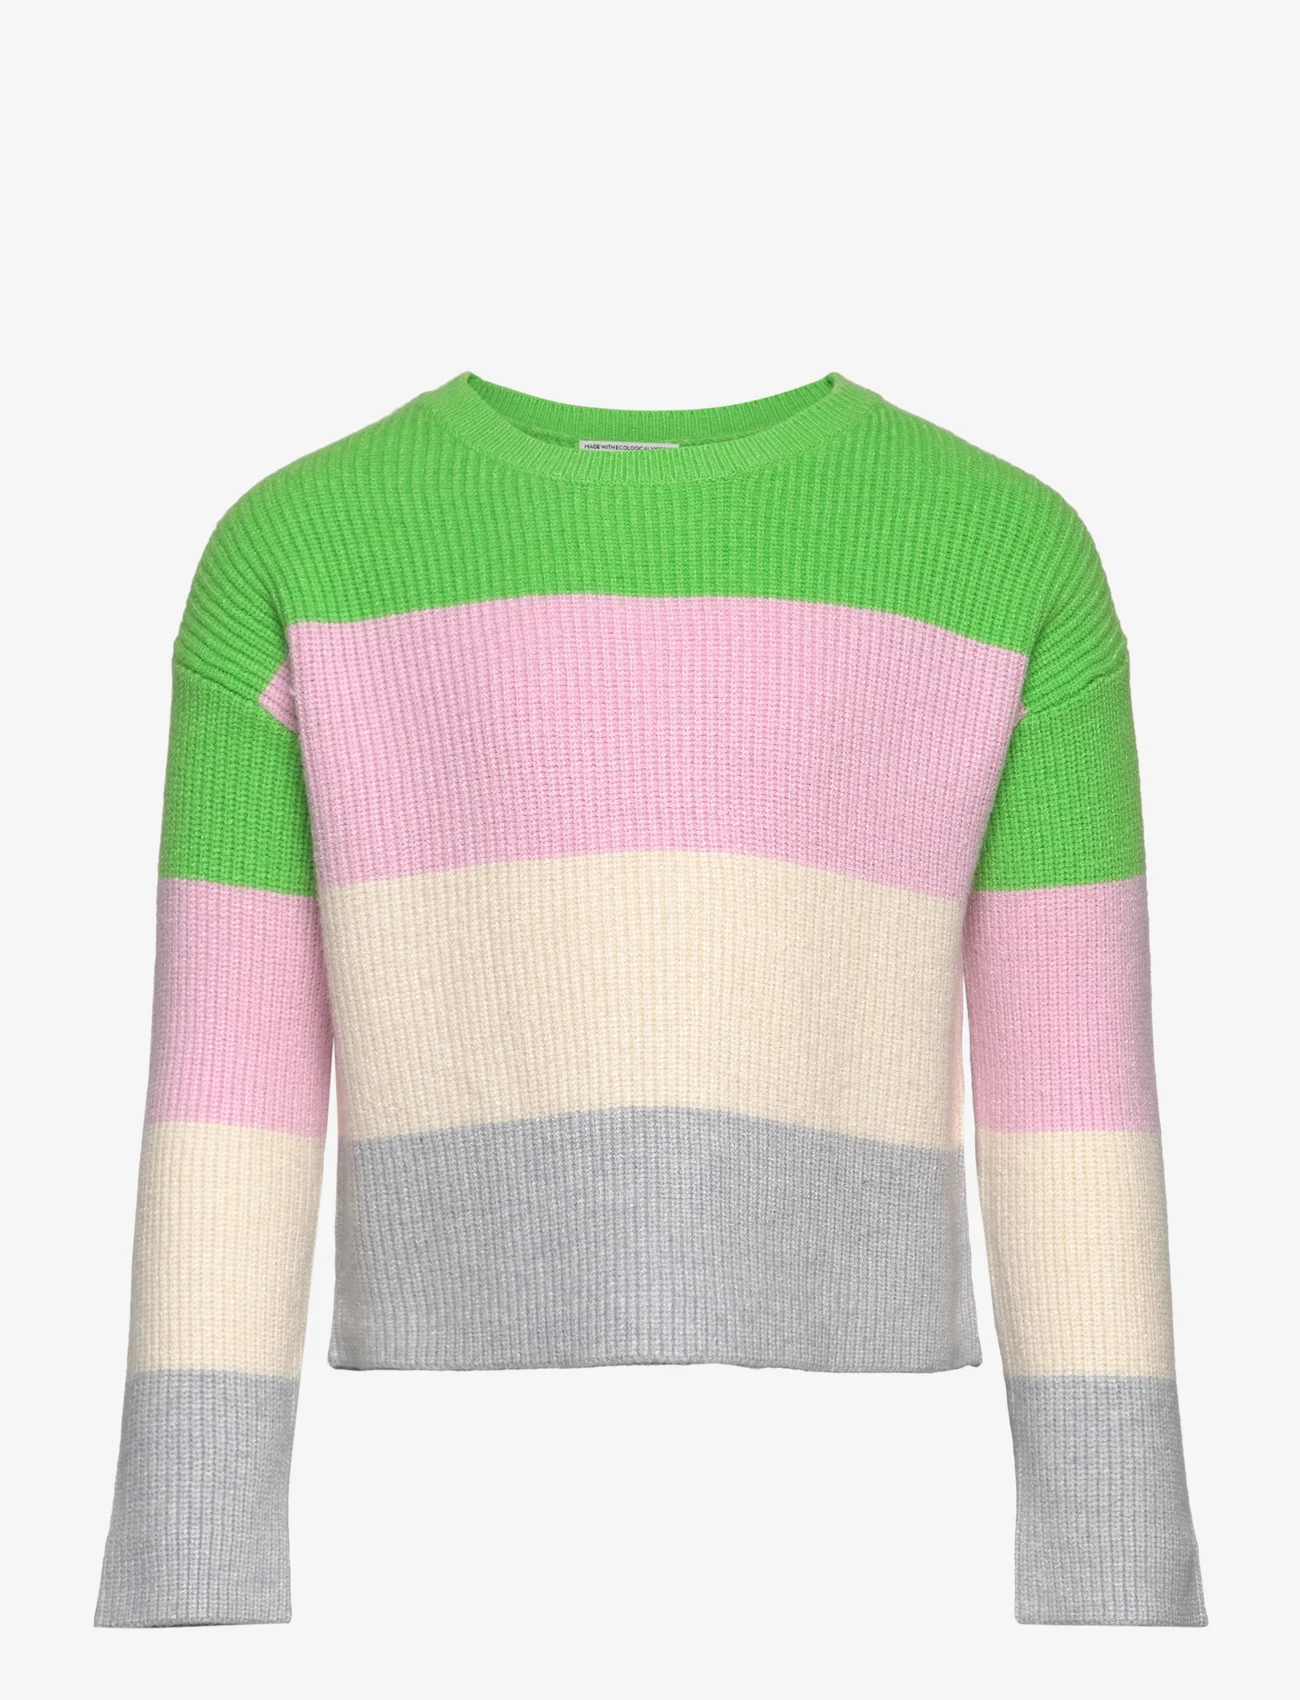 Tom Tailor - striped sweater - džemperi - green pink multicolor stripe - 0